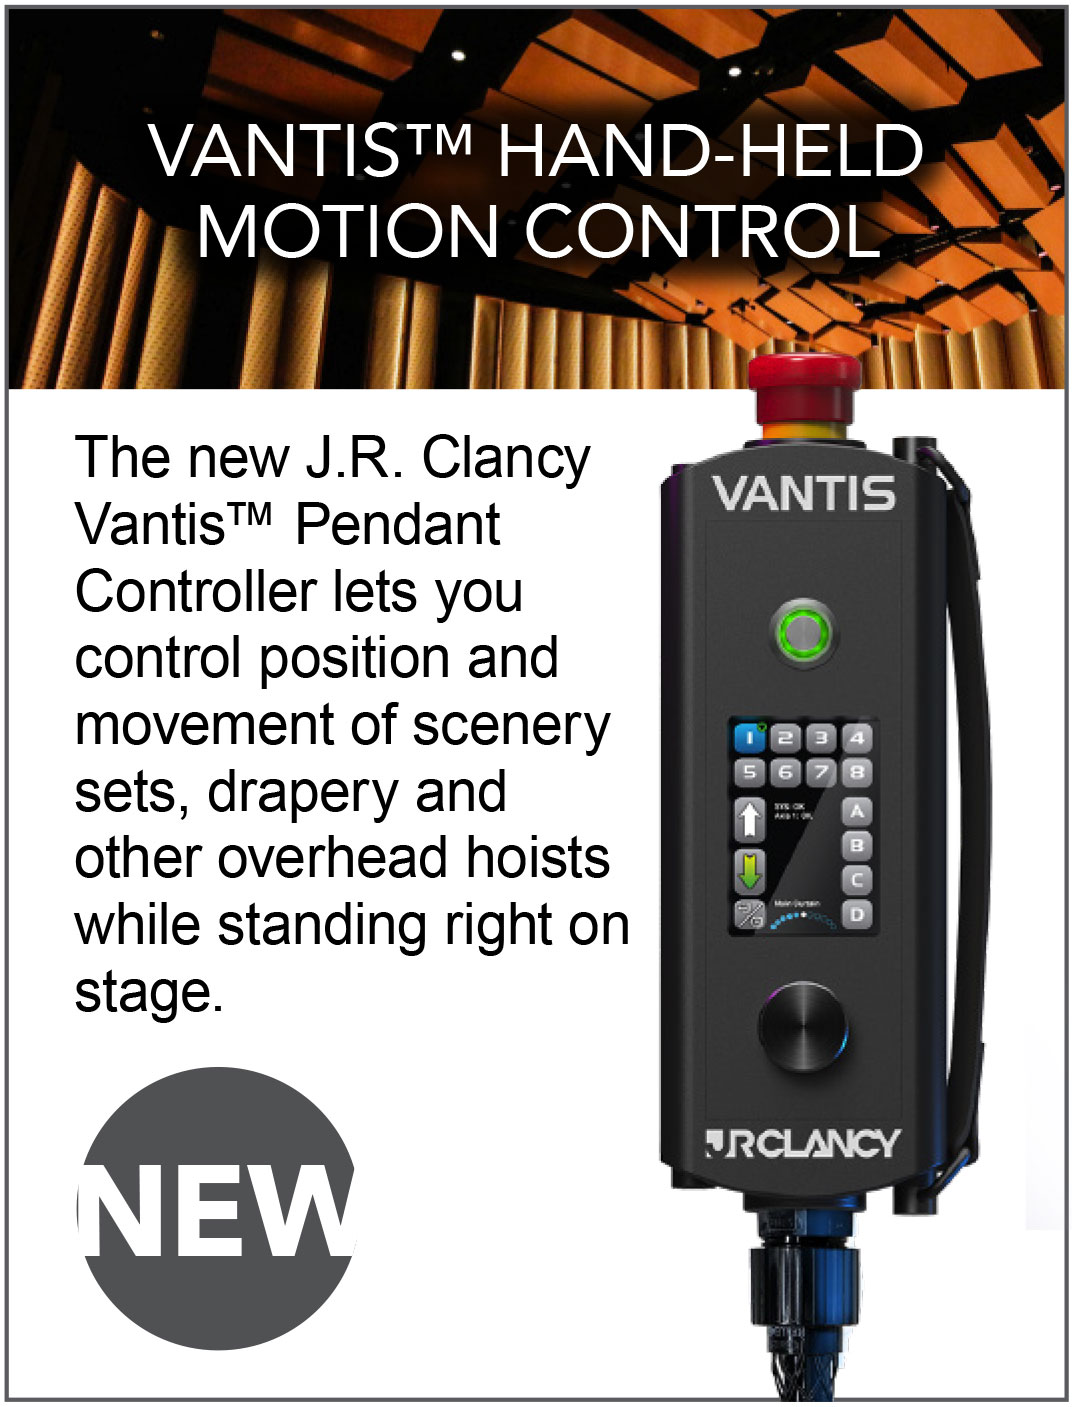 VANTIS™ HAND-HELD
MOTION CONTROL